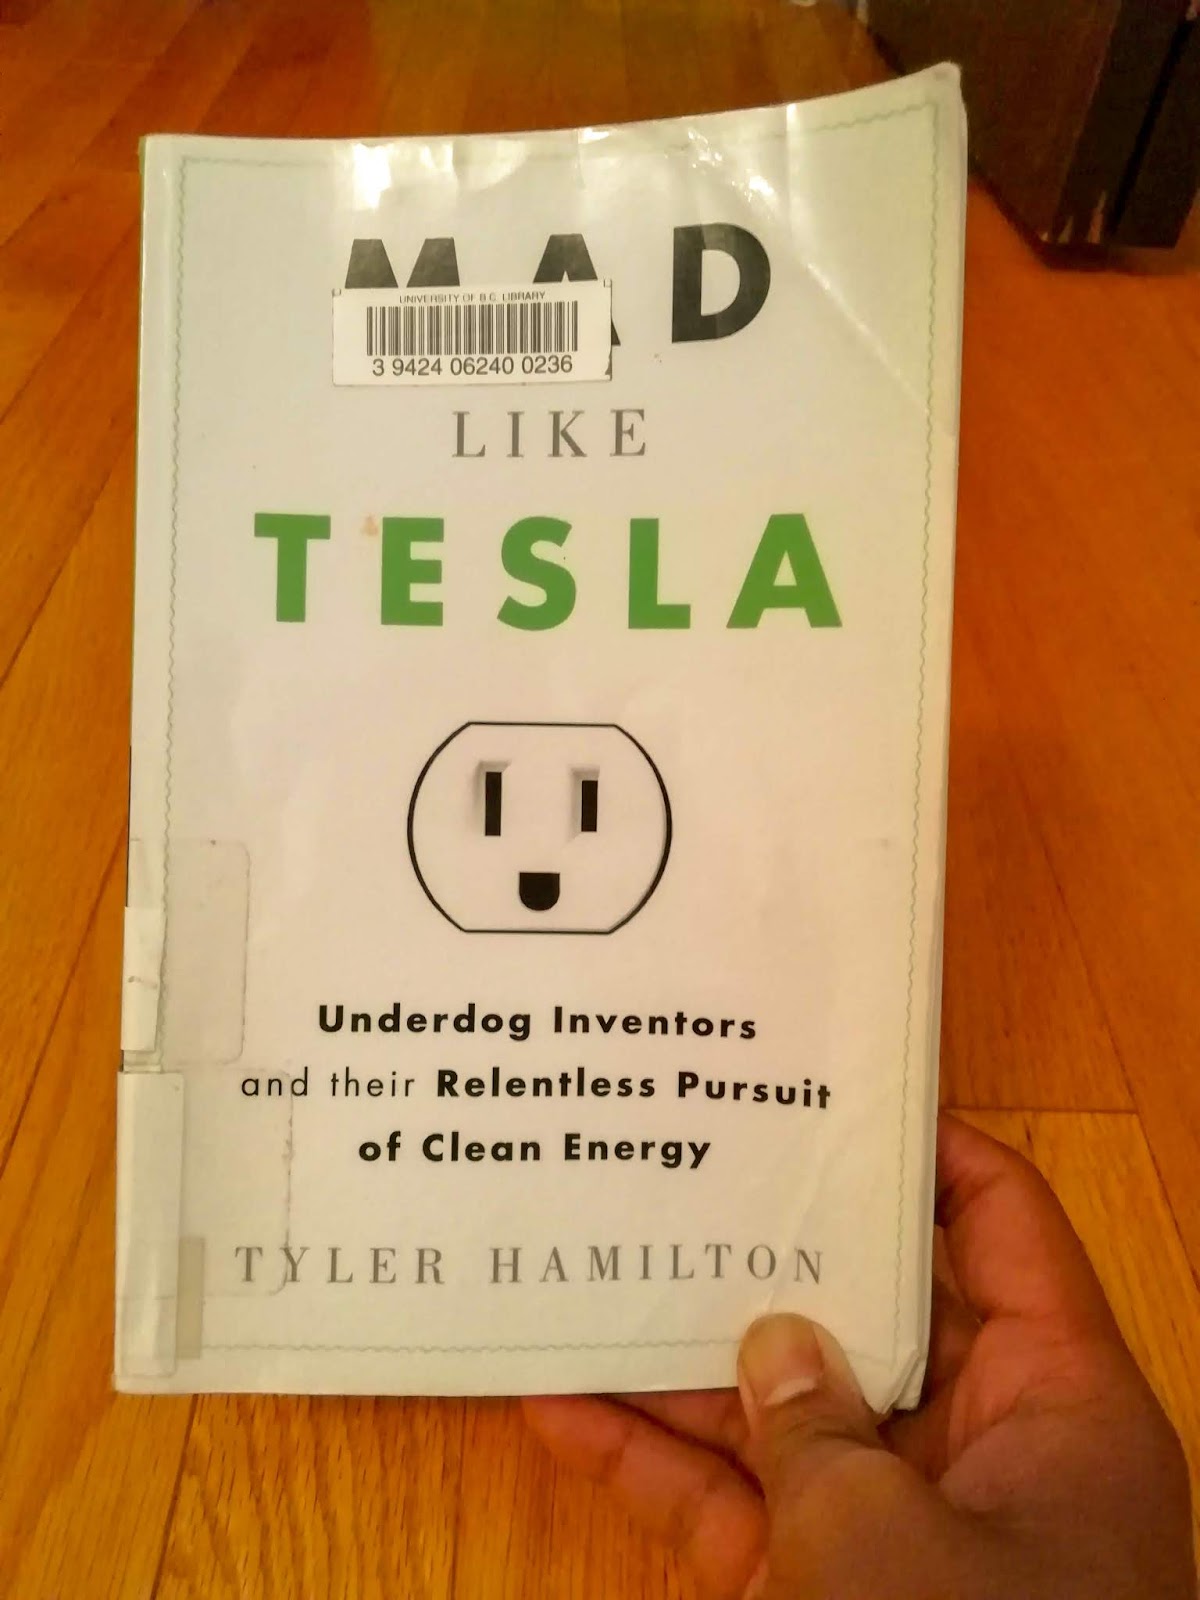 Book Post 2 : “Mad like Tesla” by Tyler Hamilton